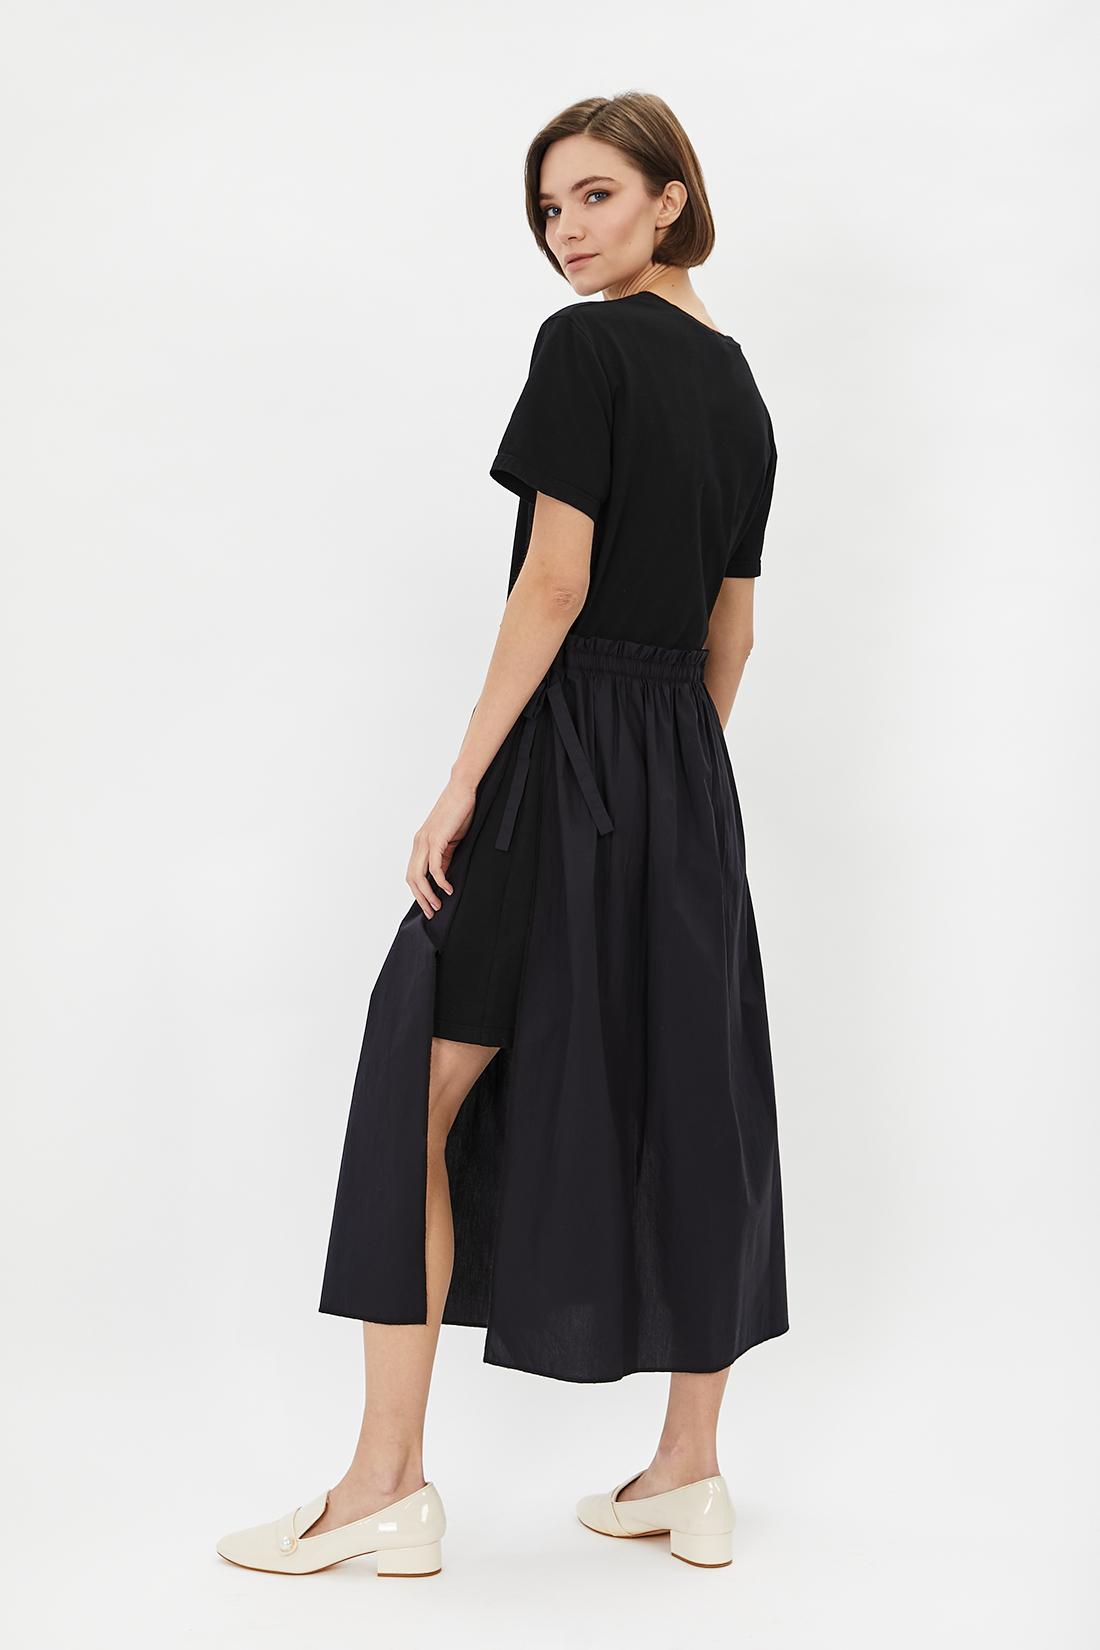 Платье (арт. baon B451086), размер L, цвет черный Платье (арт. baon B451086) - фото 2